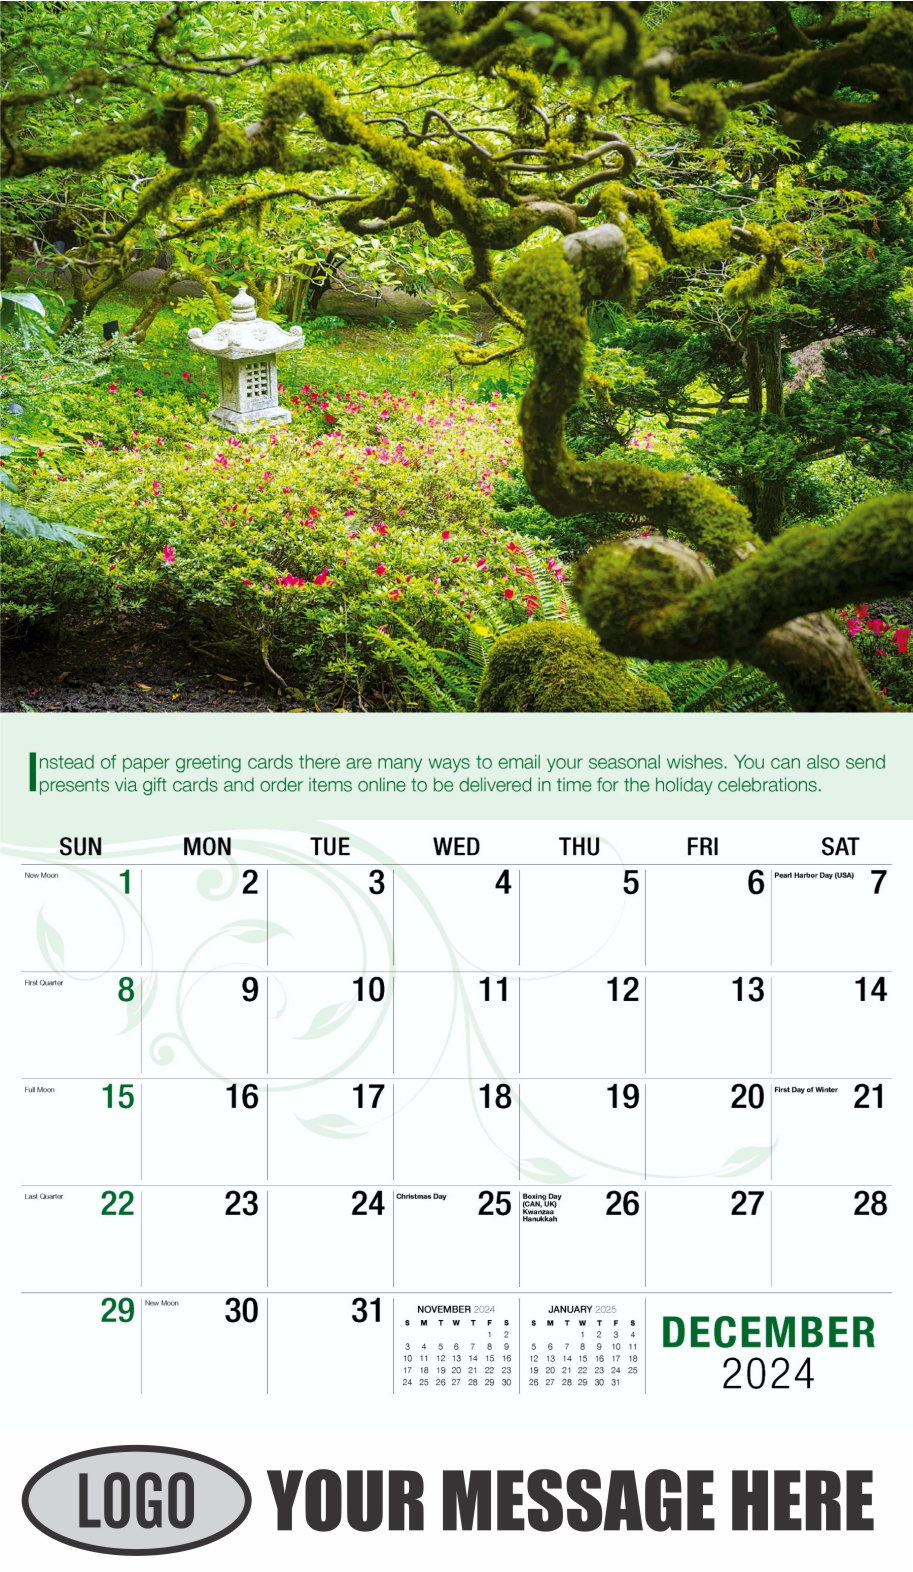 Go Green 2024 Business Promotion Calendar - December